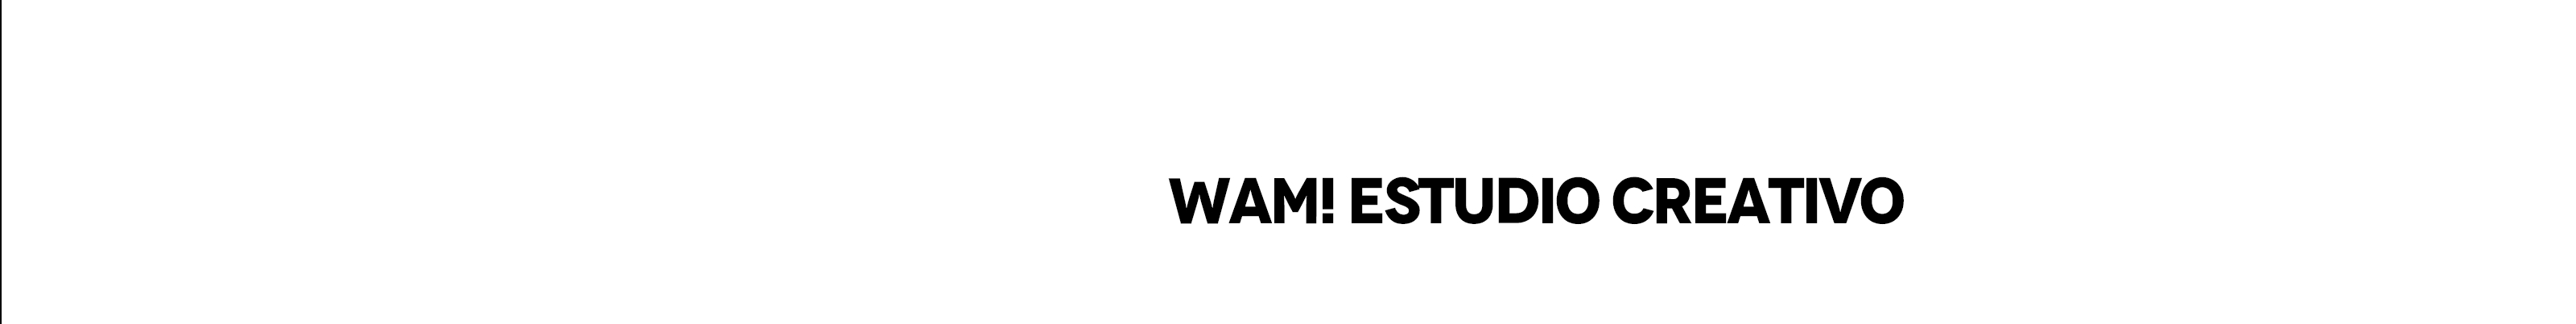 WAM! Estudio Creativo's profile banner